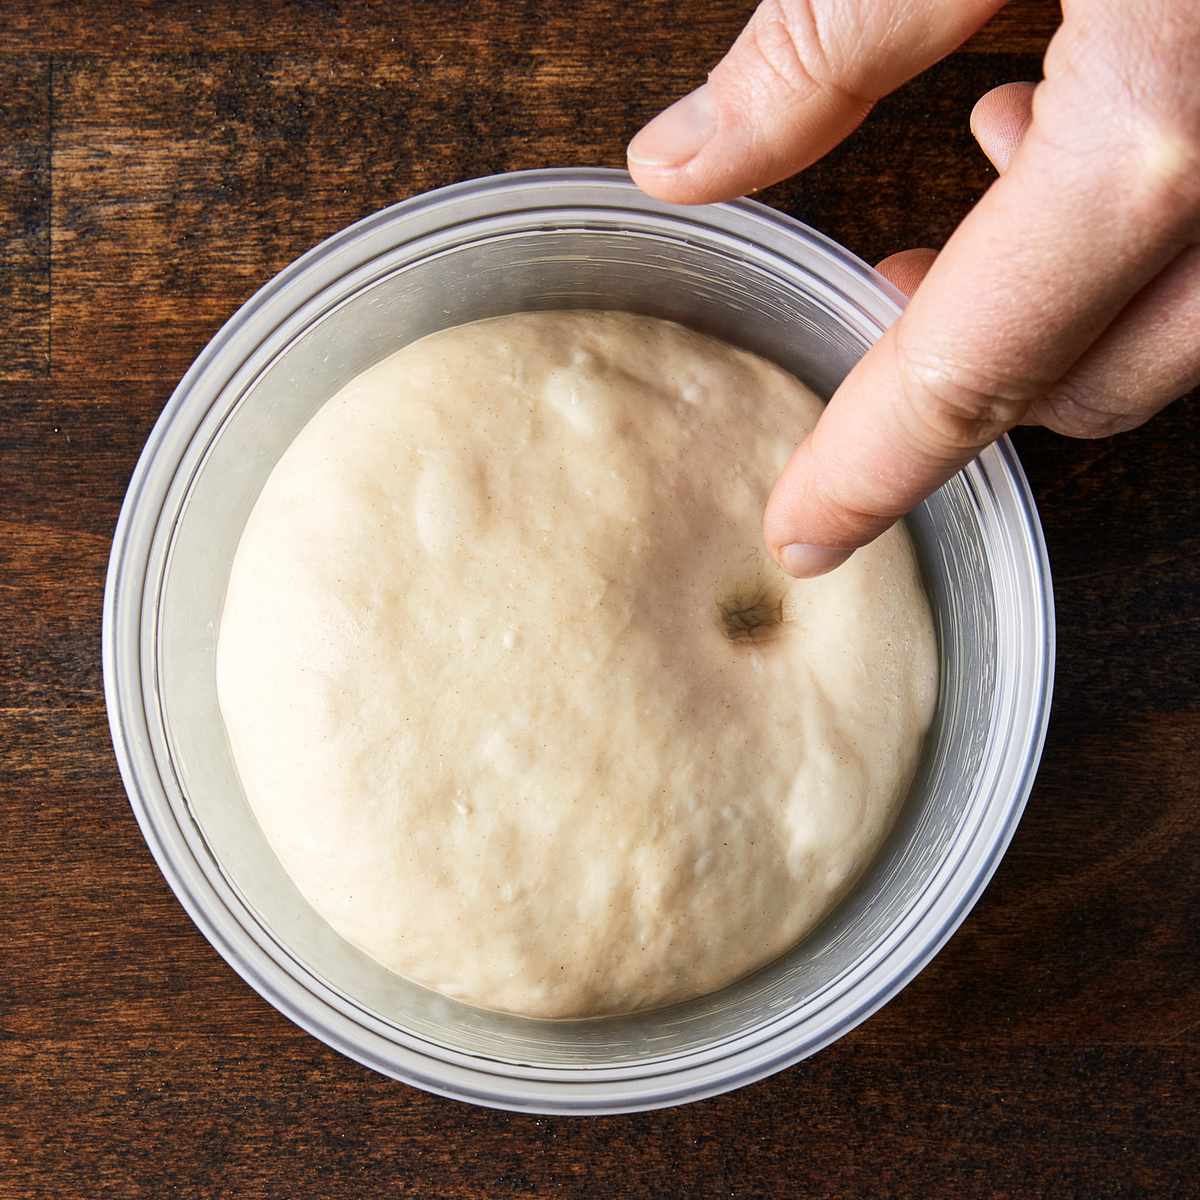 fingerprint in pizza dough